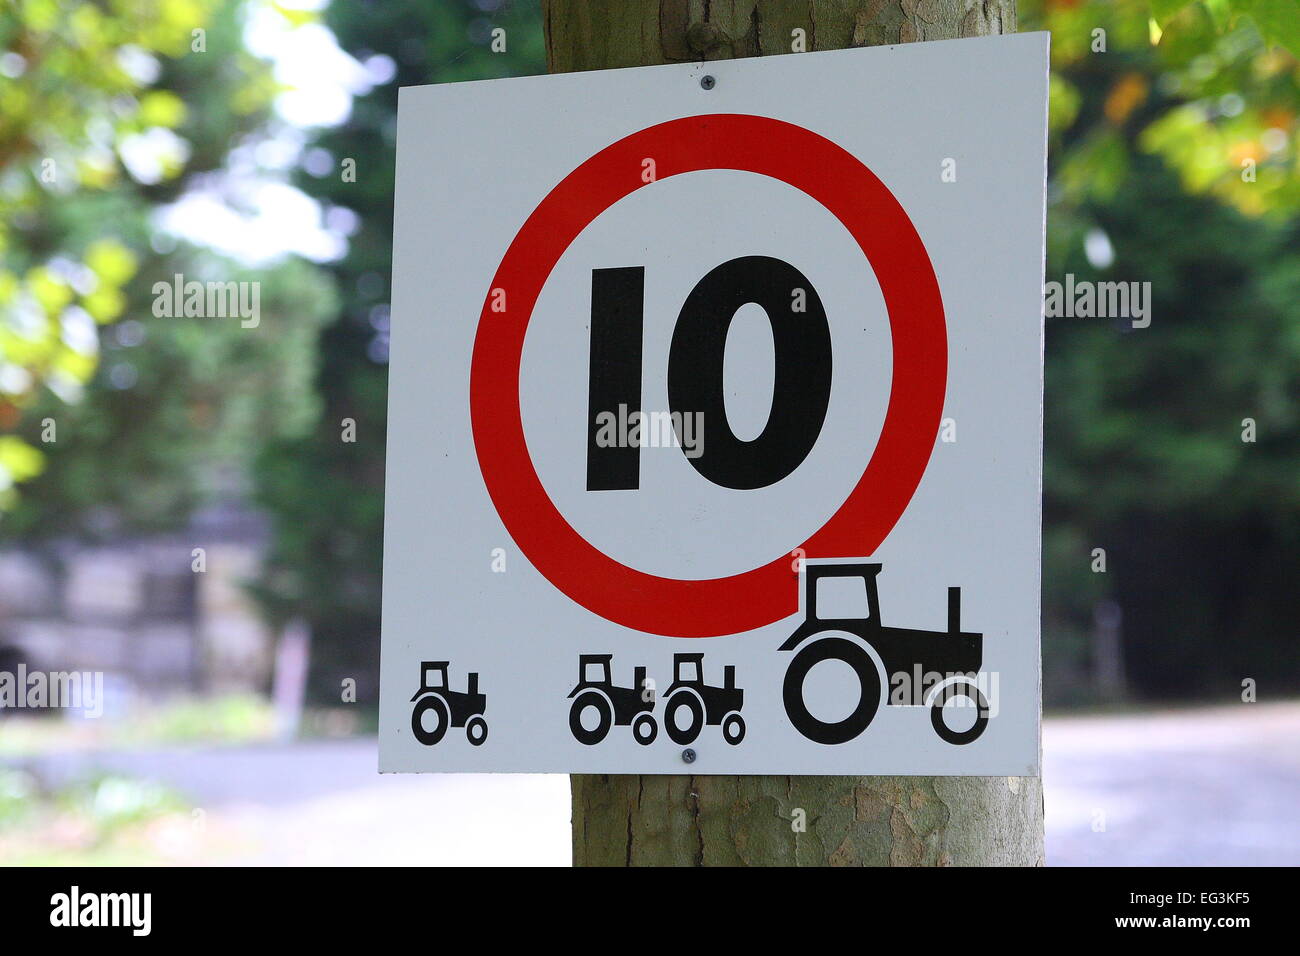 10 speed limit, Caution Tractors Stock Photo